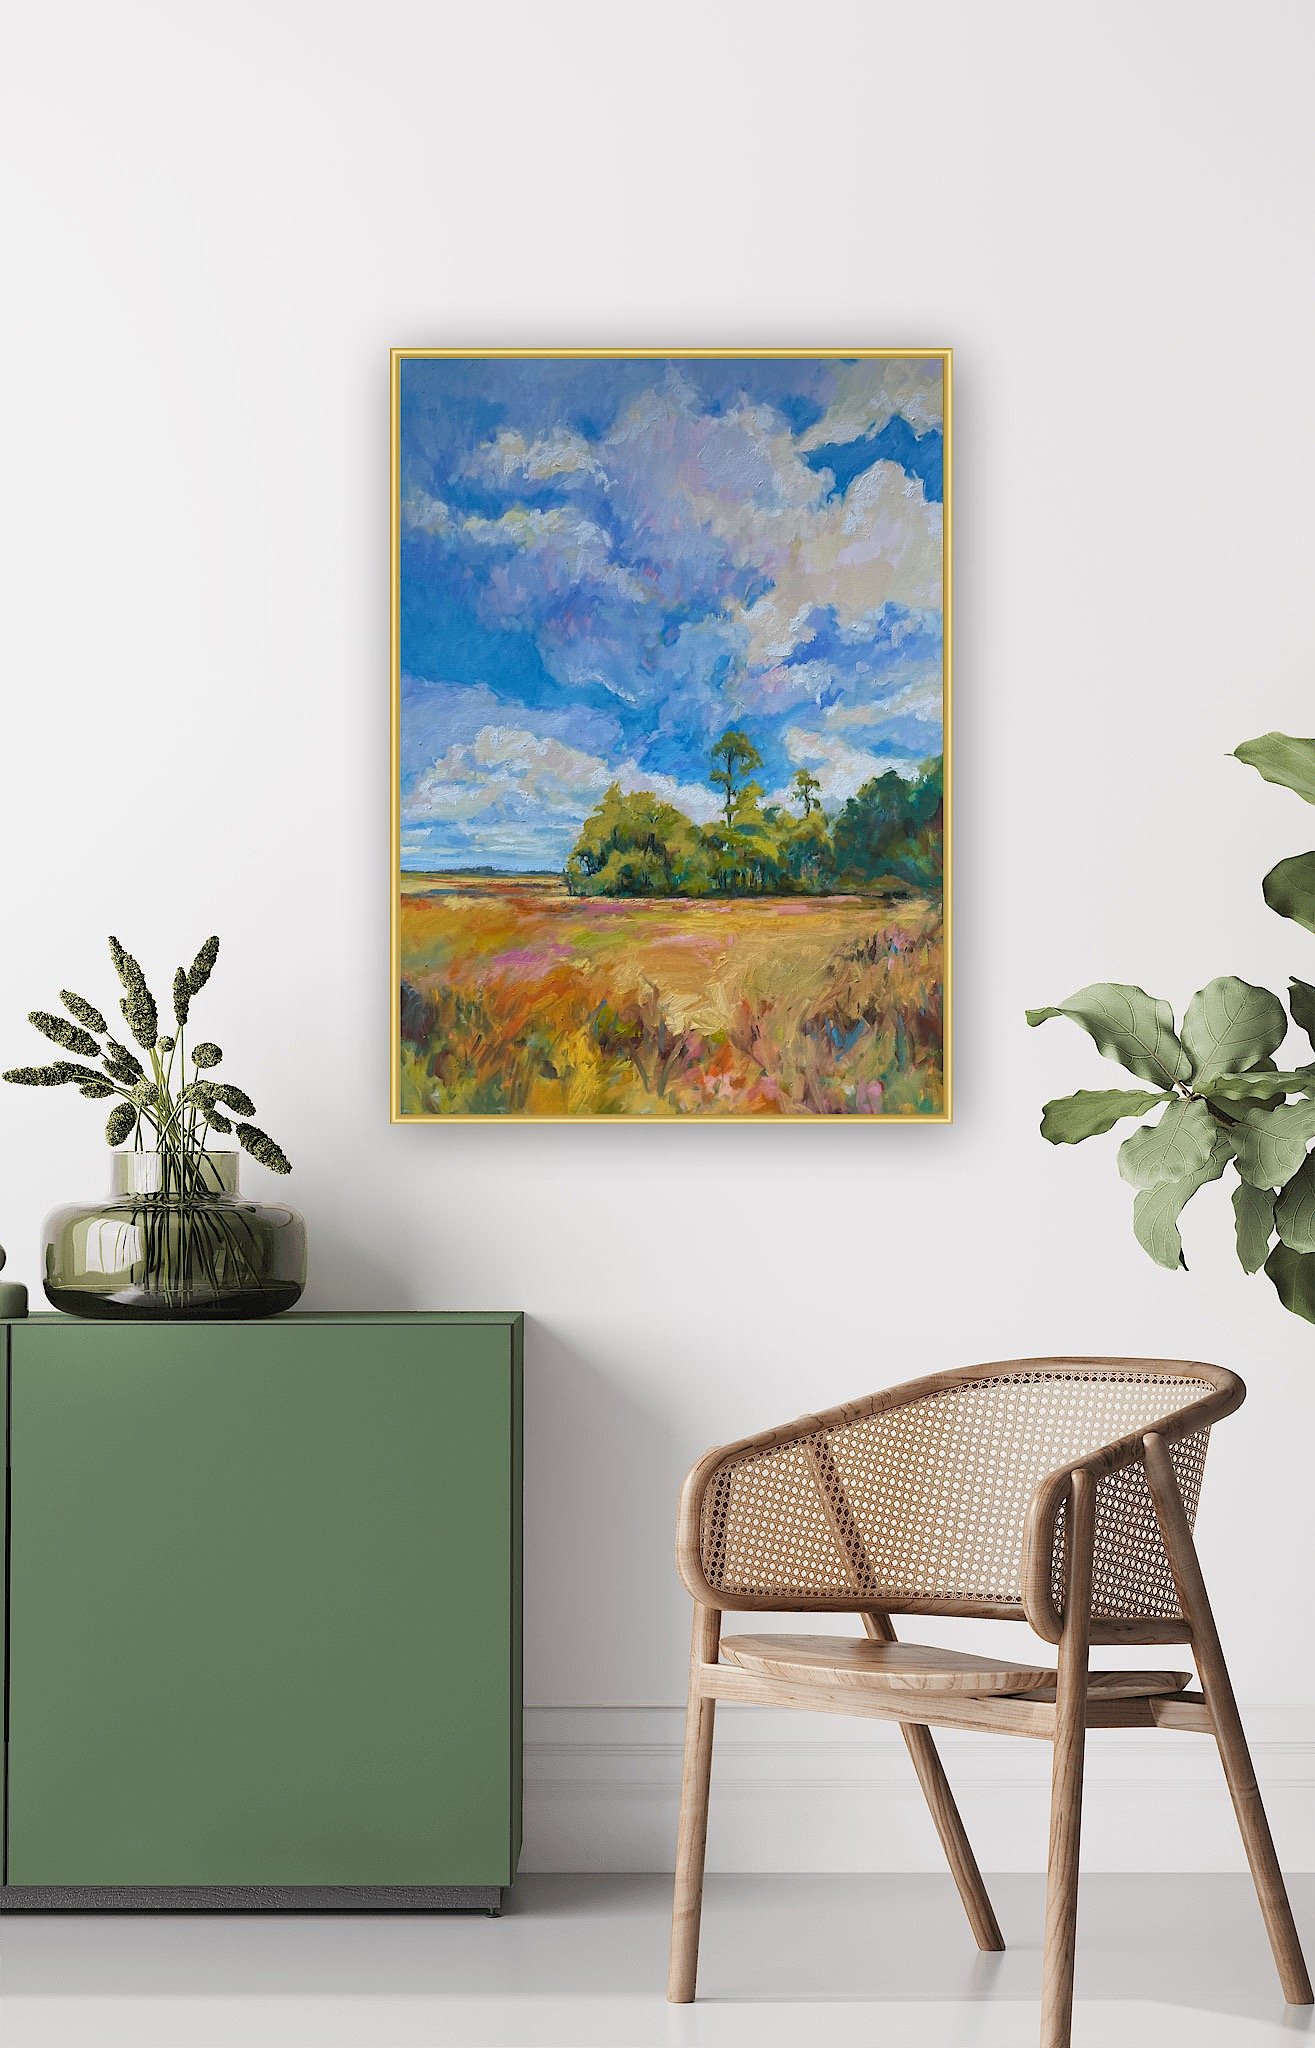 BlueSkies-art-painting-oil-painting-Katie-Wall-Art-Podracky-marsh-painterly-brushstrokes-gorgeous-original-print-coastal.JPG